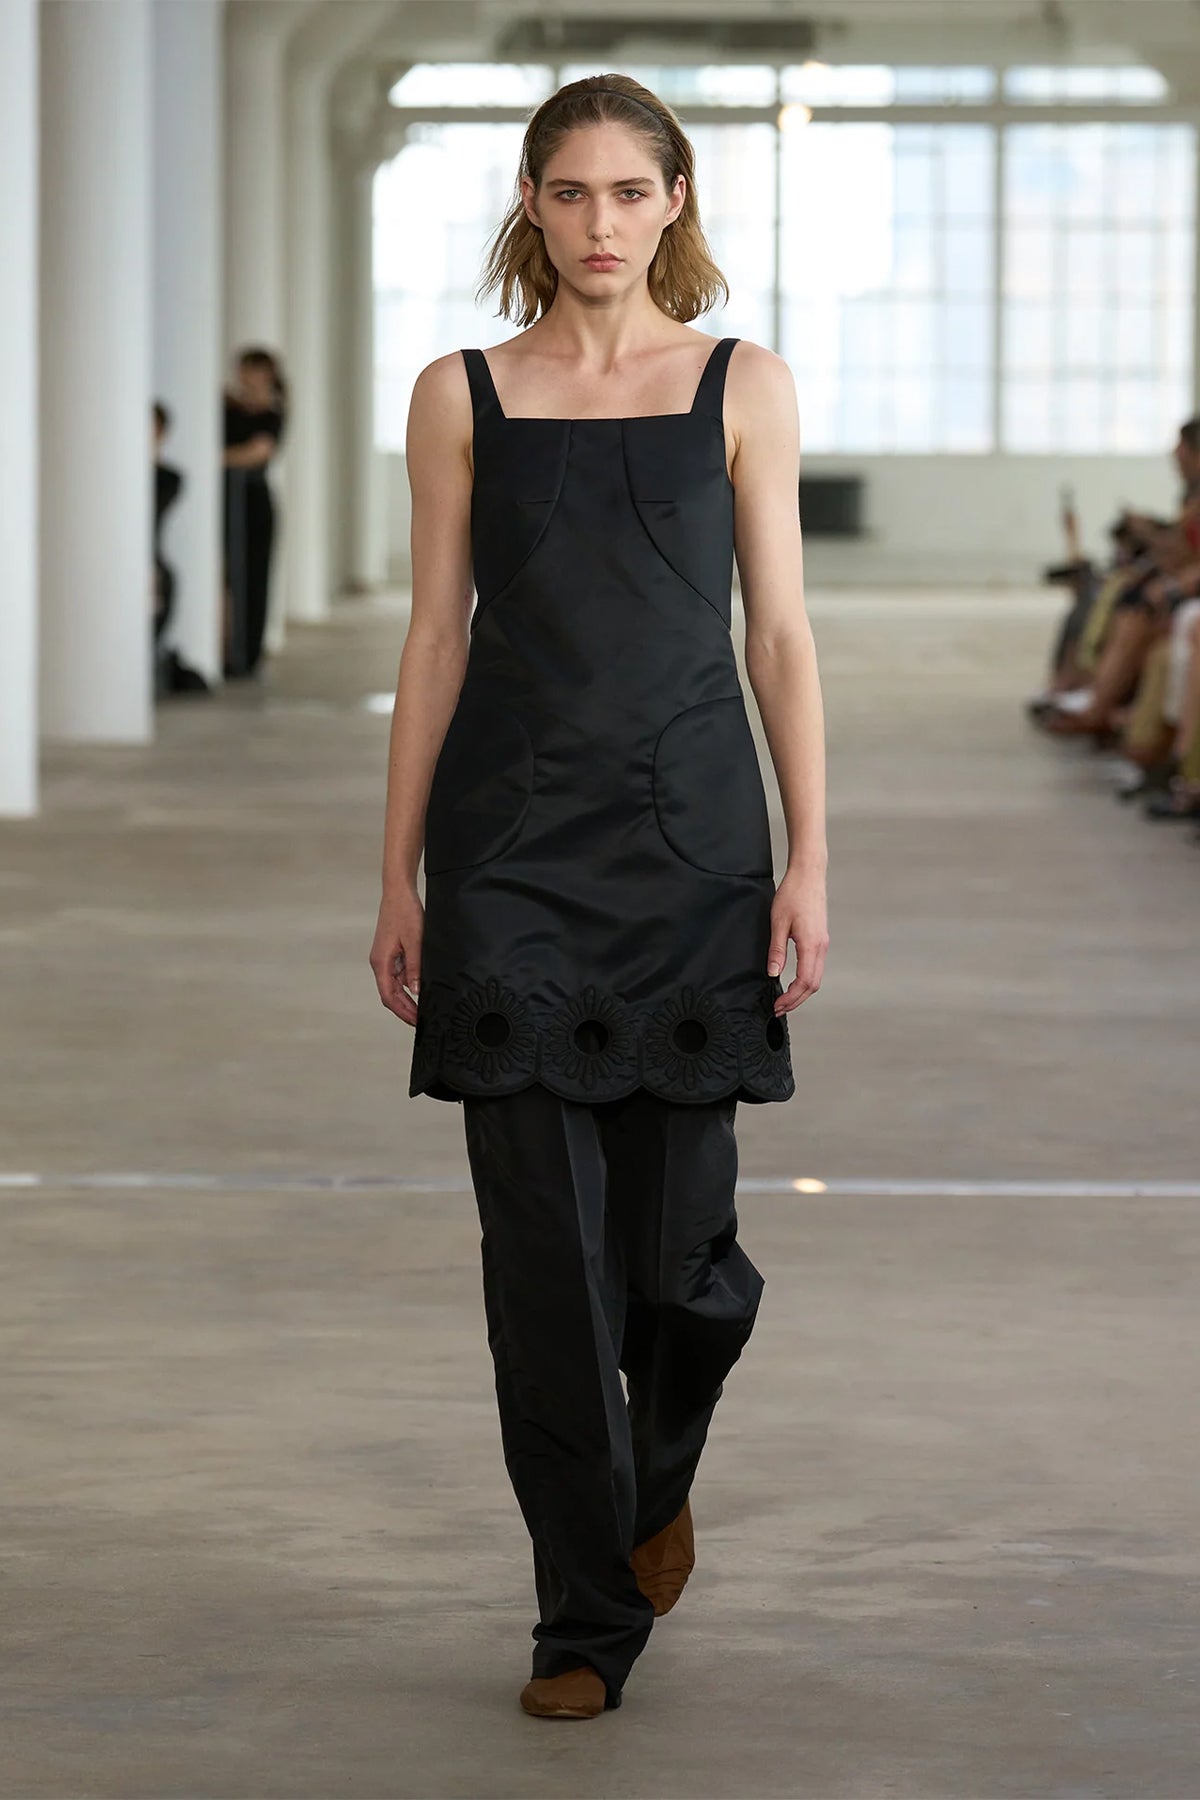 Daisy Embroidery Short Dress in Black - shop-olivia.com